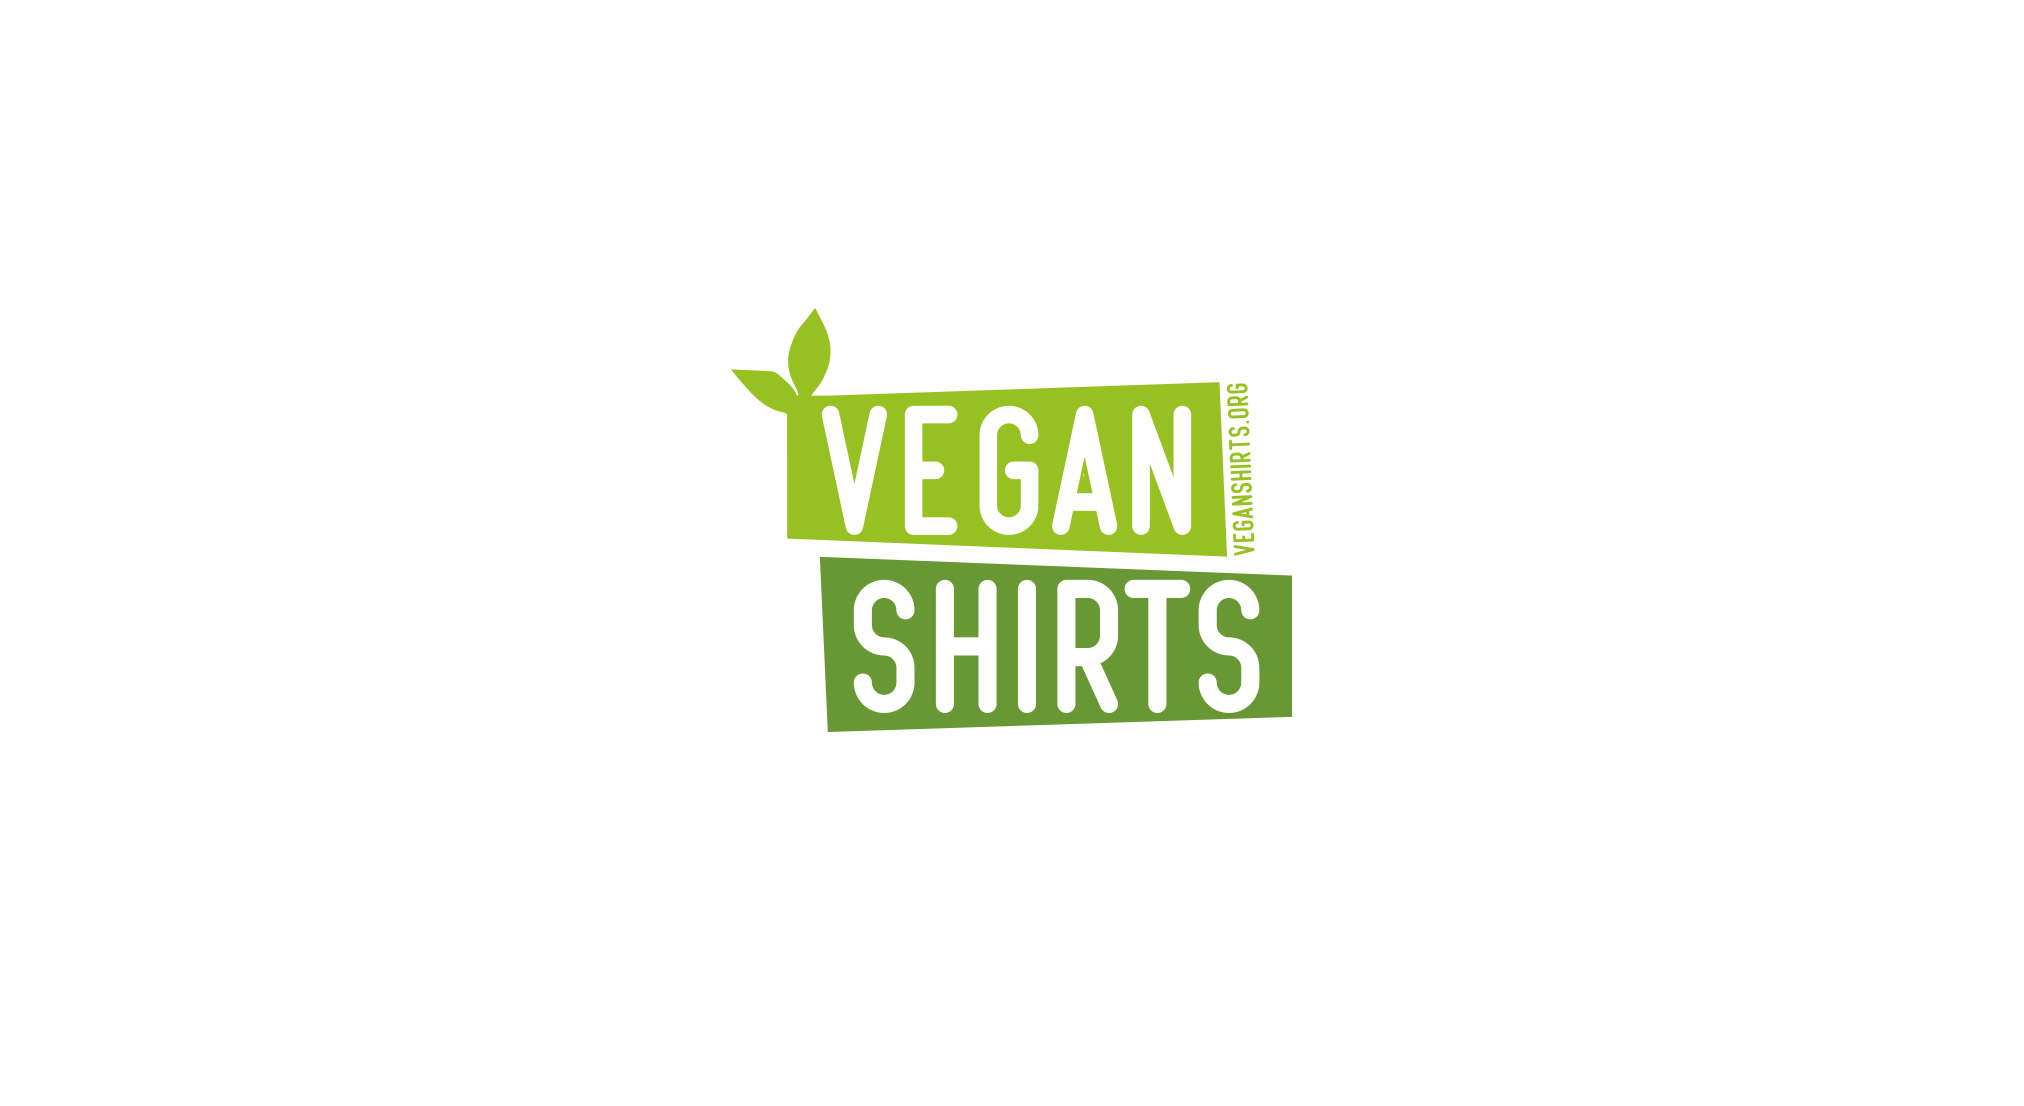 Vegan shirts